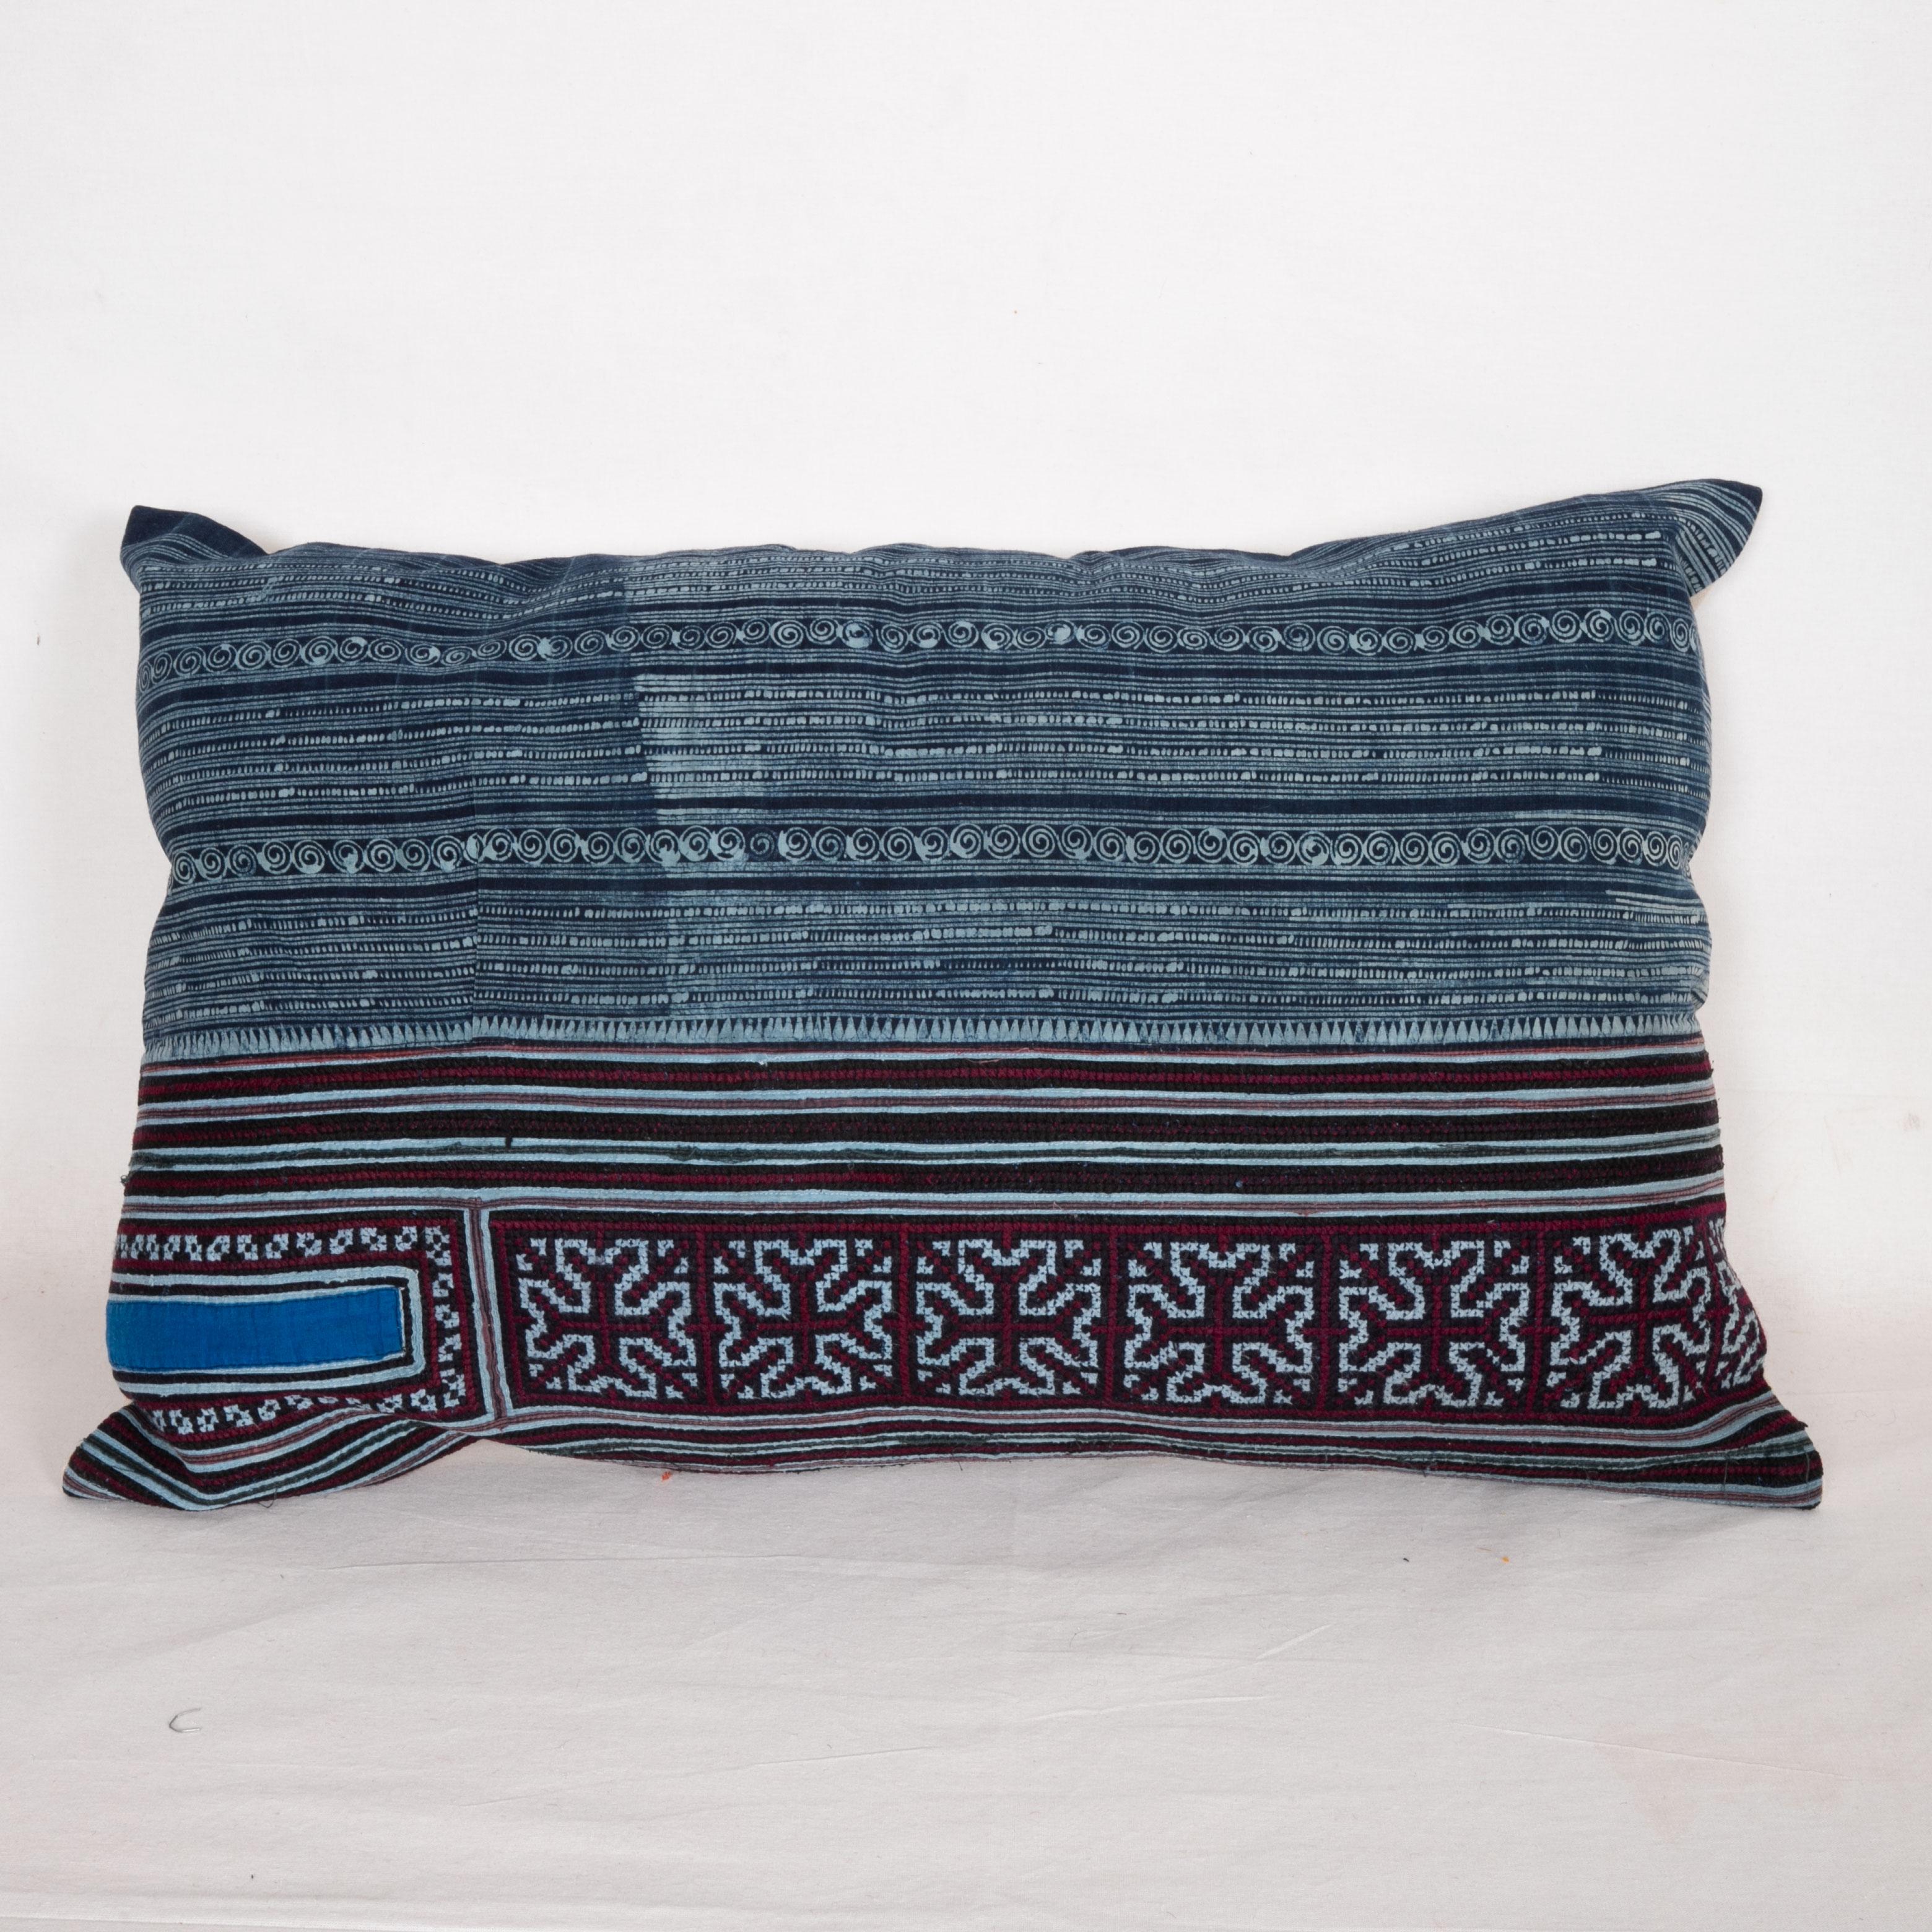 Thai Batik Pillow Cases / Cushions Made from a Hmong Hill Tribe Batik Textile